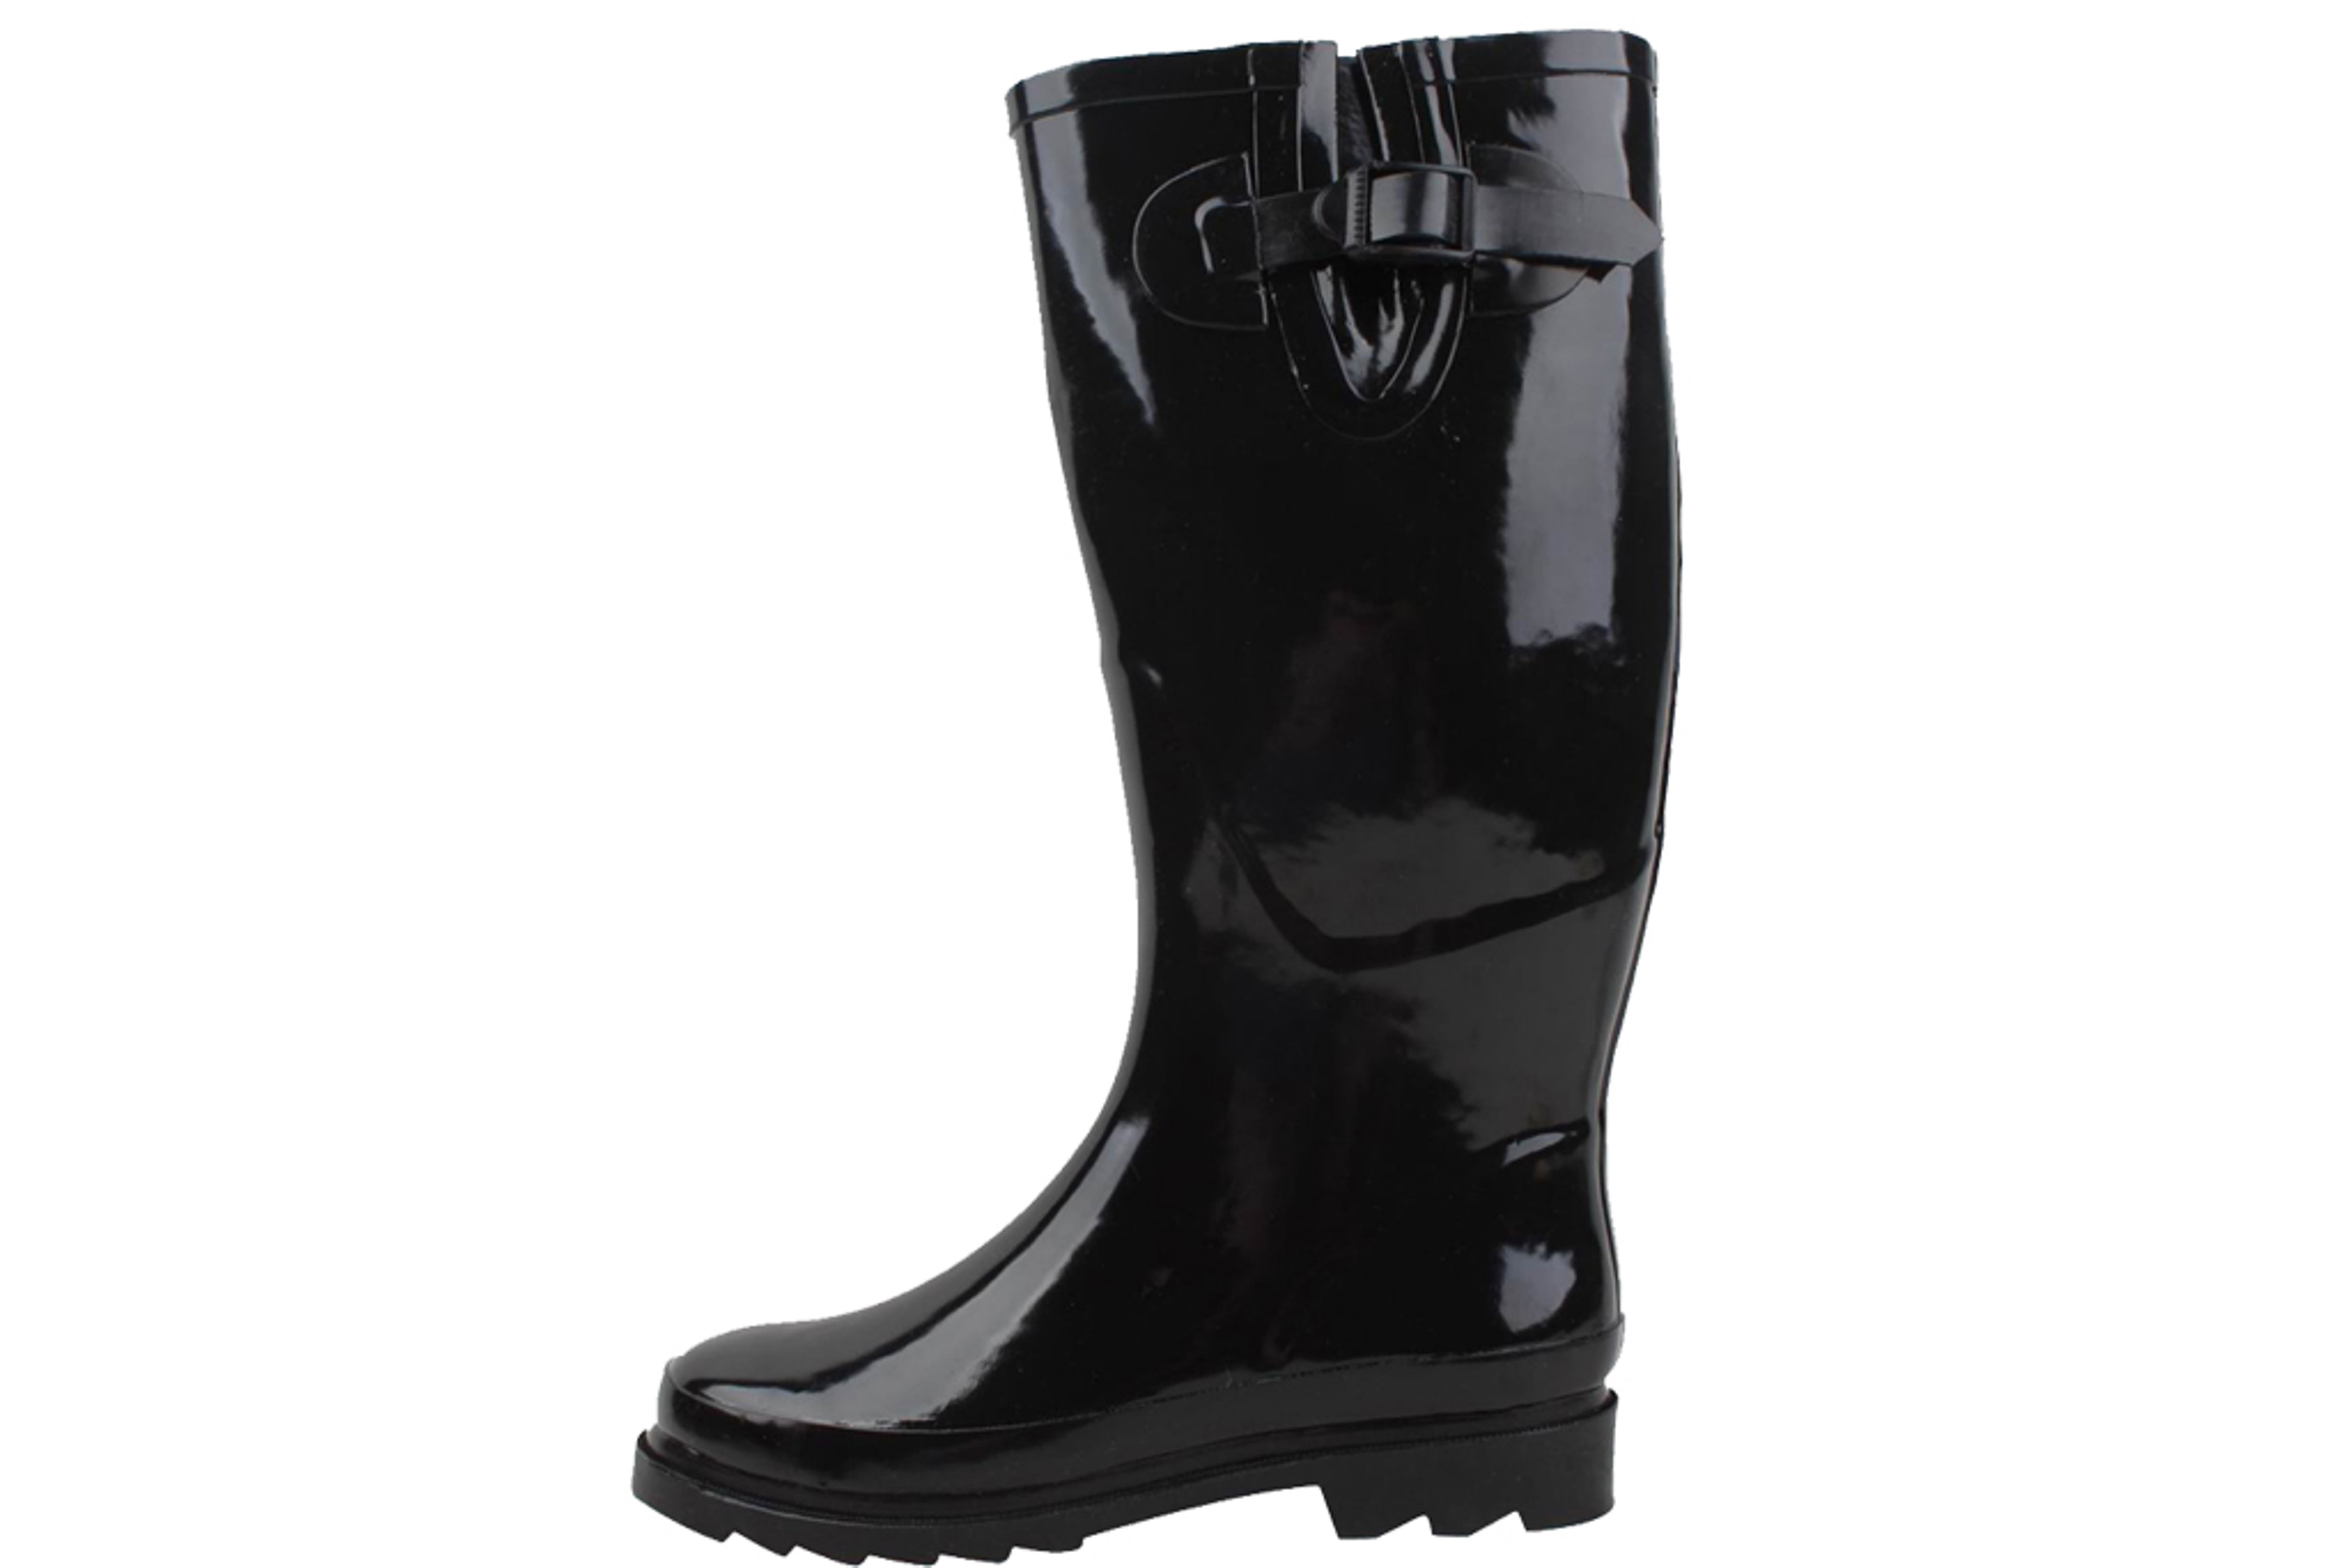 Starbay Women's Rubber Rain Boots, Black - Walmart.com